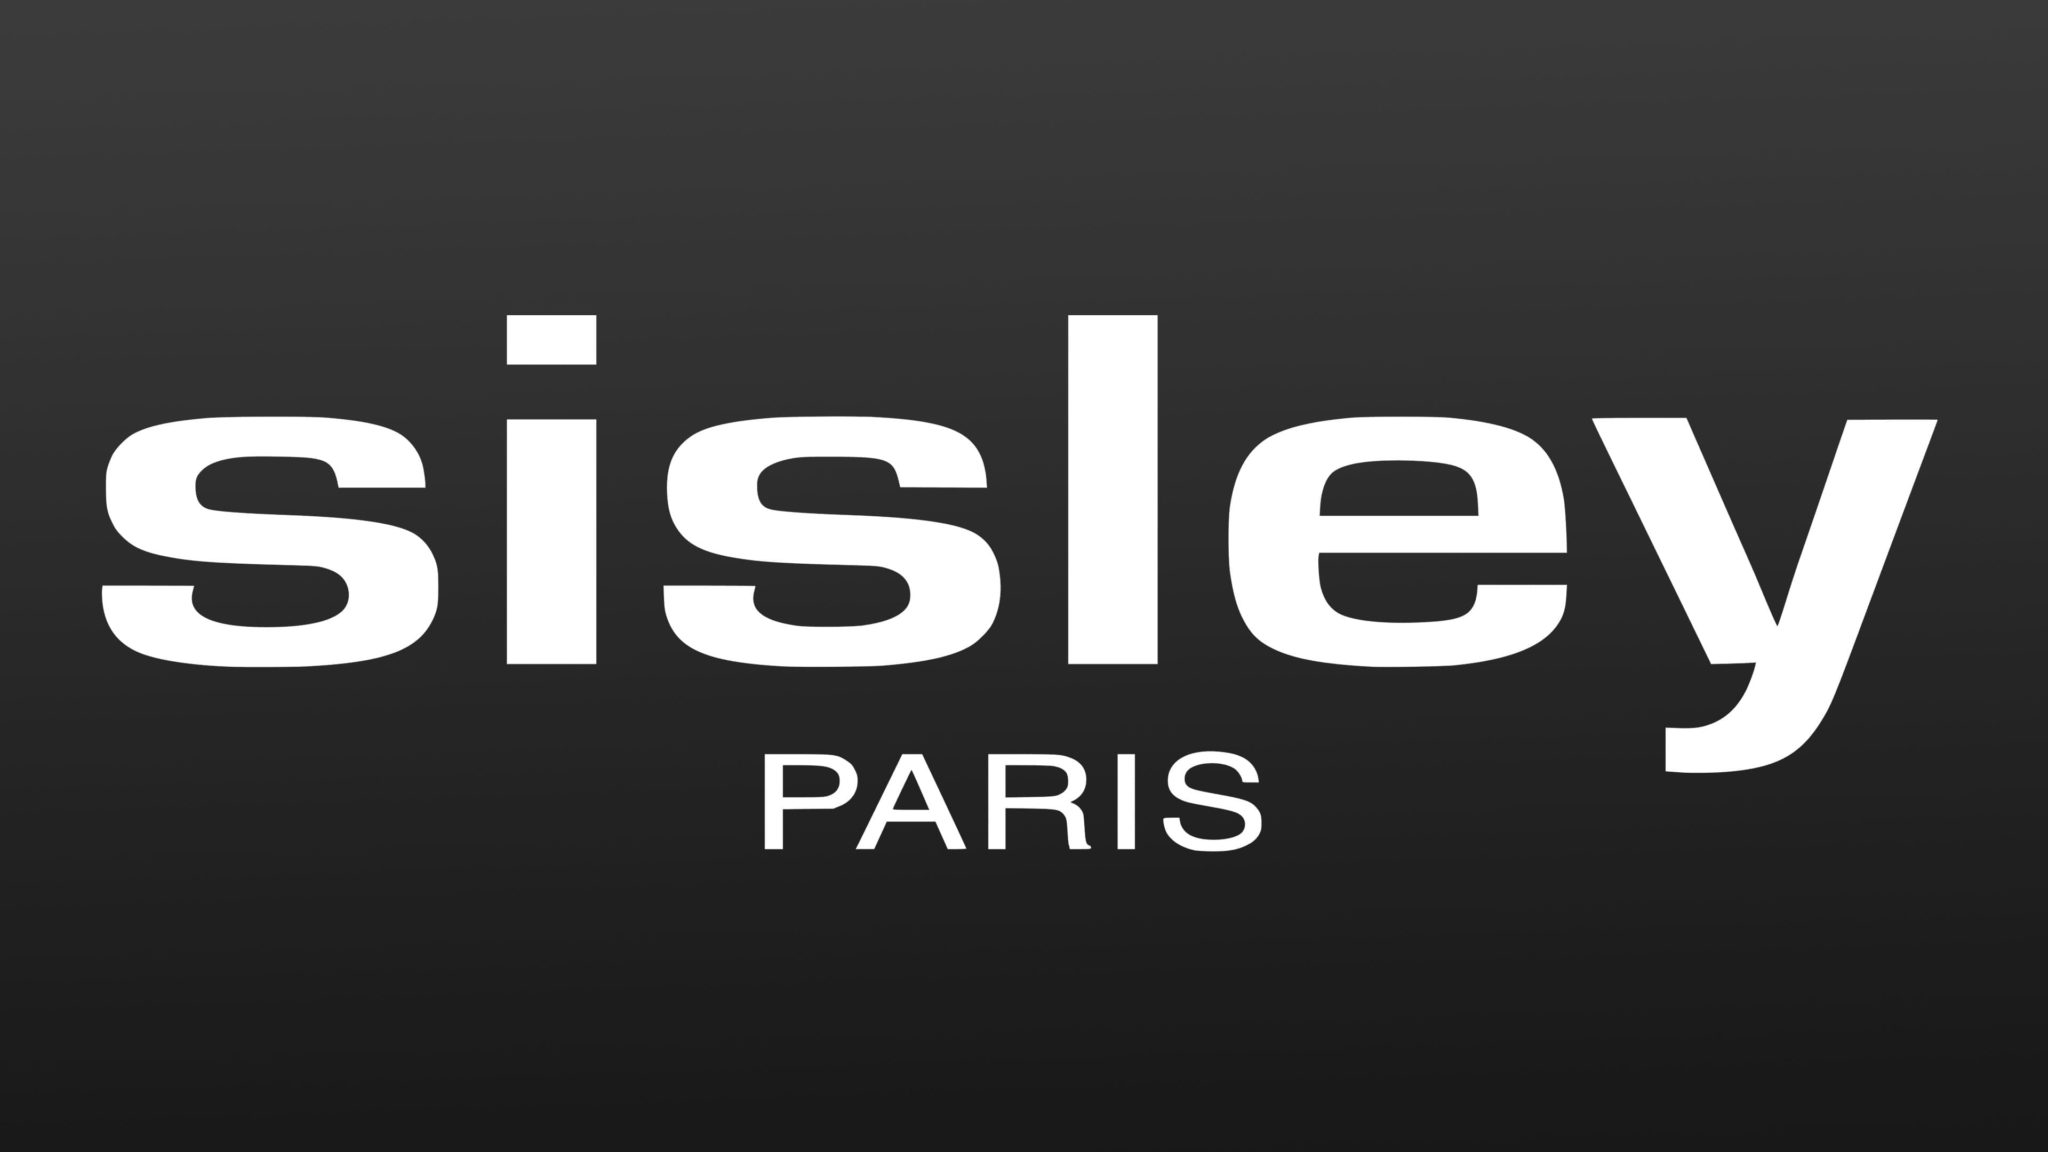 Sisley-logo